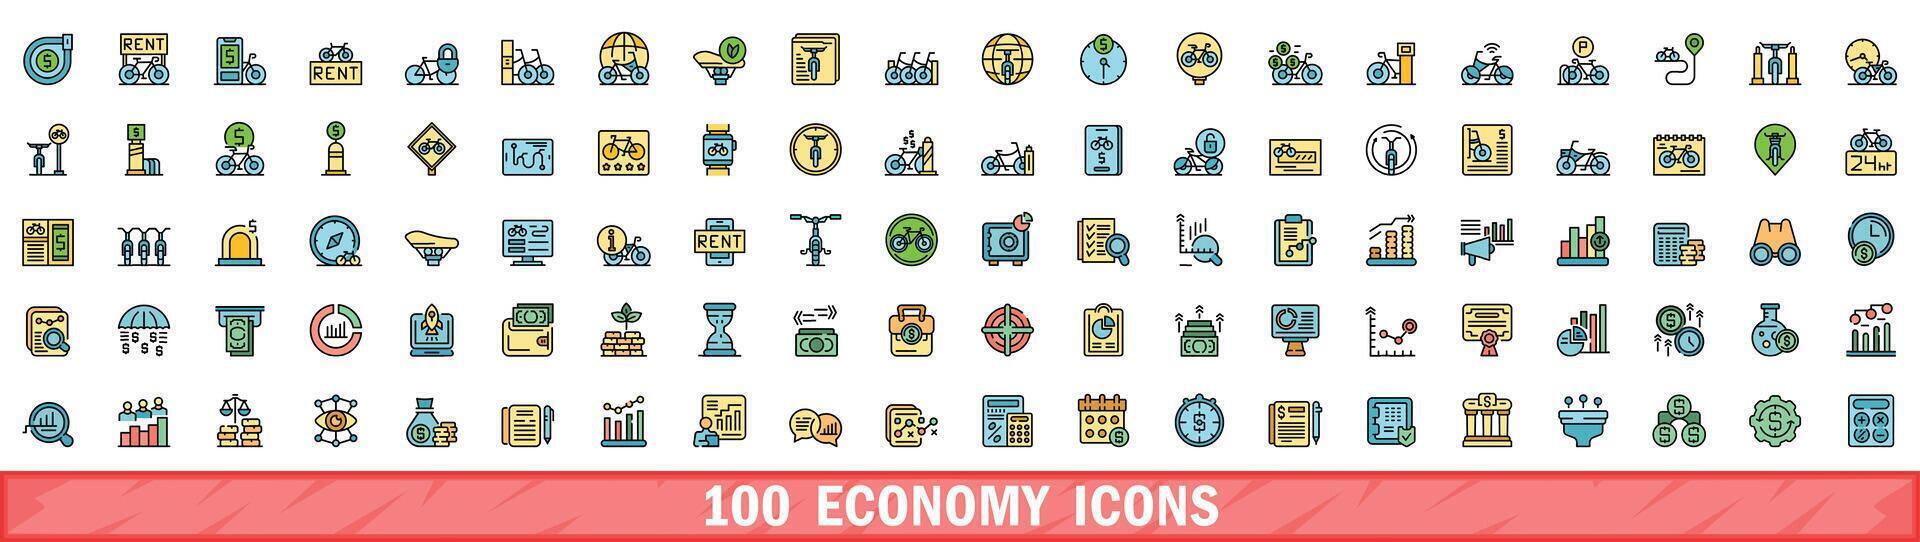 100 economie pictogrammen set, kleur lijn stijl vector